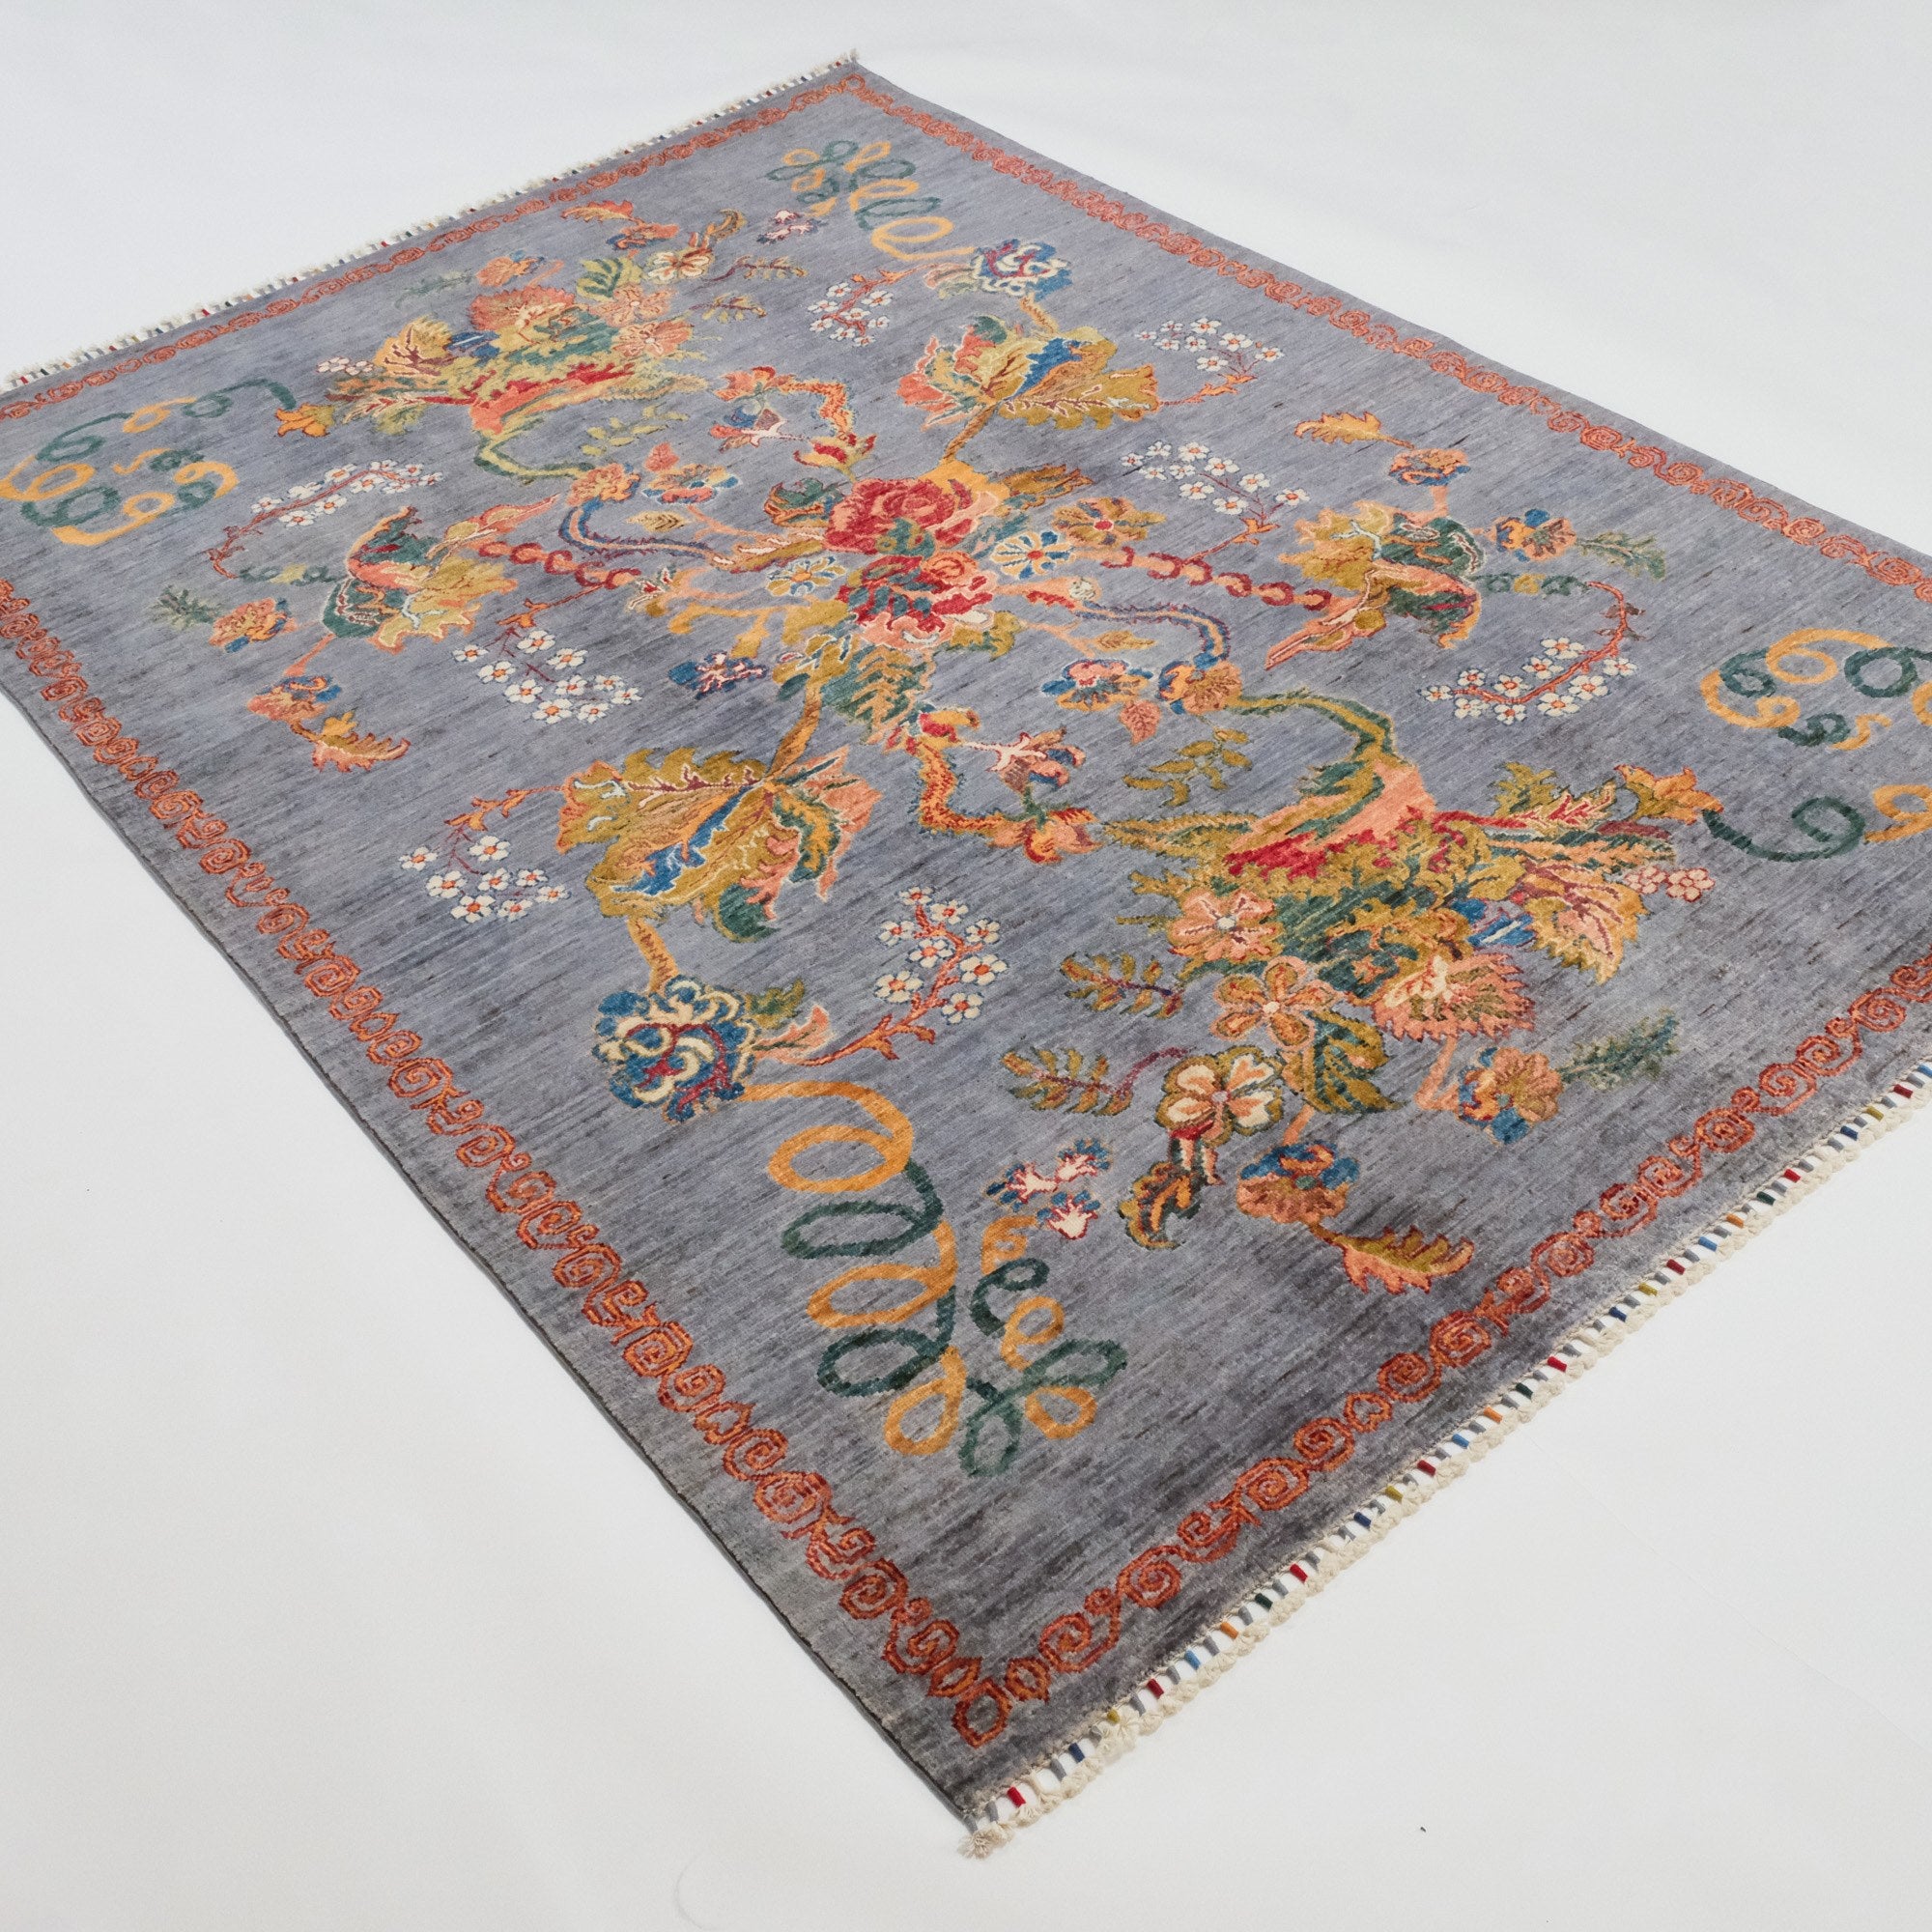 Shahzade Series Hand-Woven Karabakh Patterned Wool Carpet